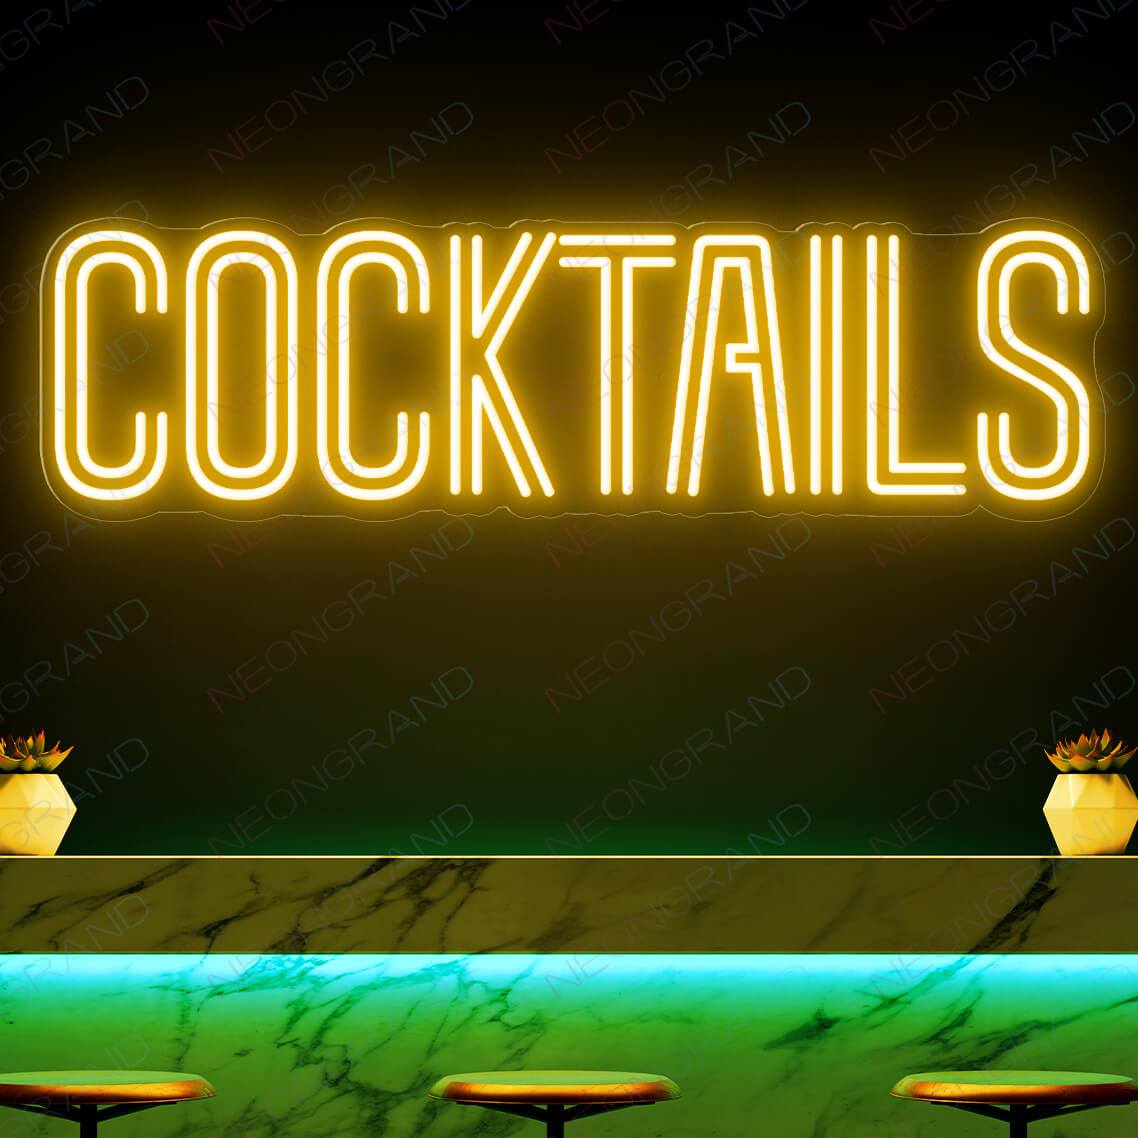 Cocktails Neon Sign Bar Led Light orange yellow